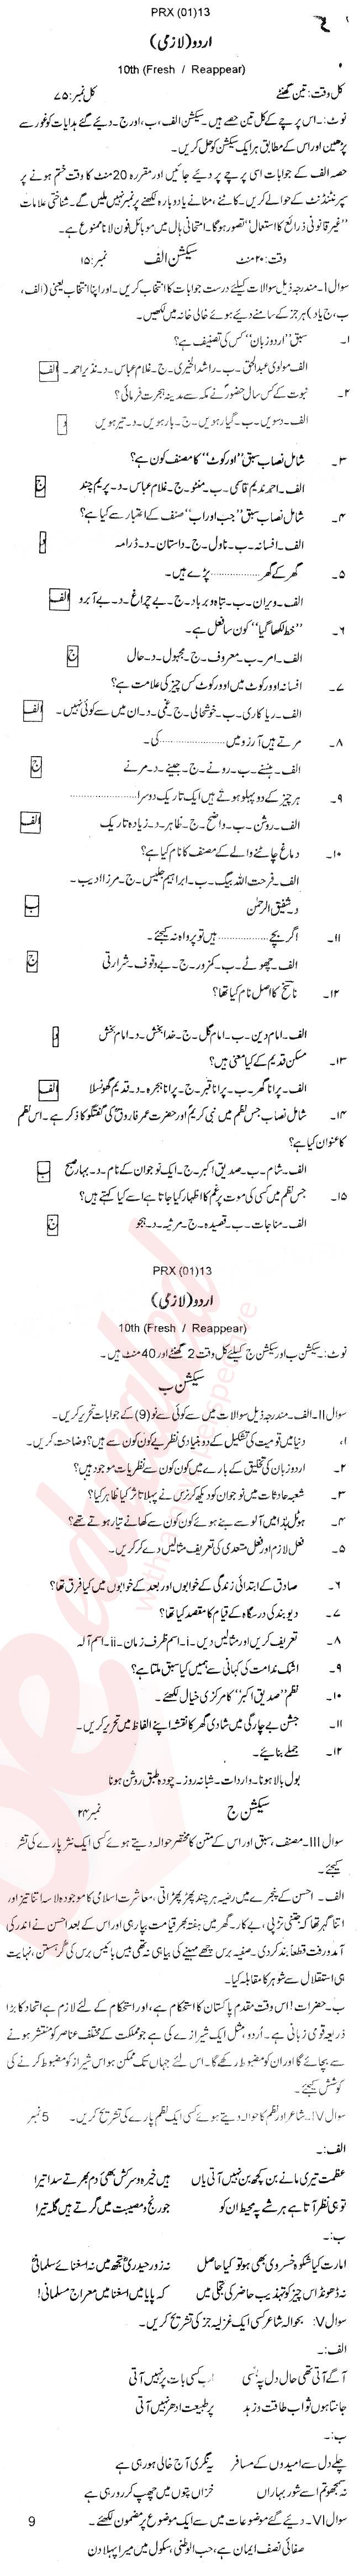 Urdu 10th Urdu Medium Past Paper Group 1 BISE Bannu 2013